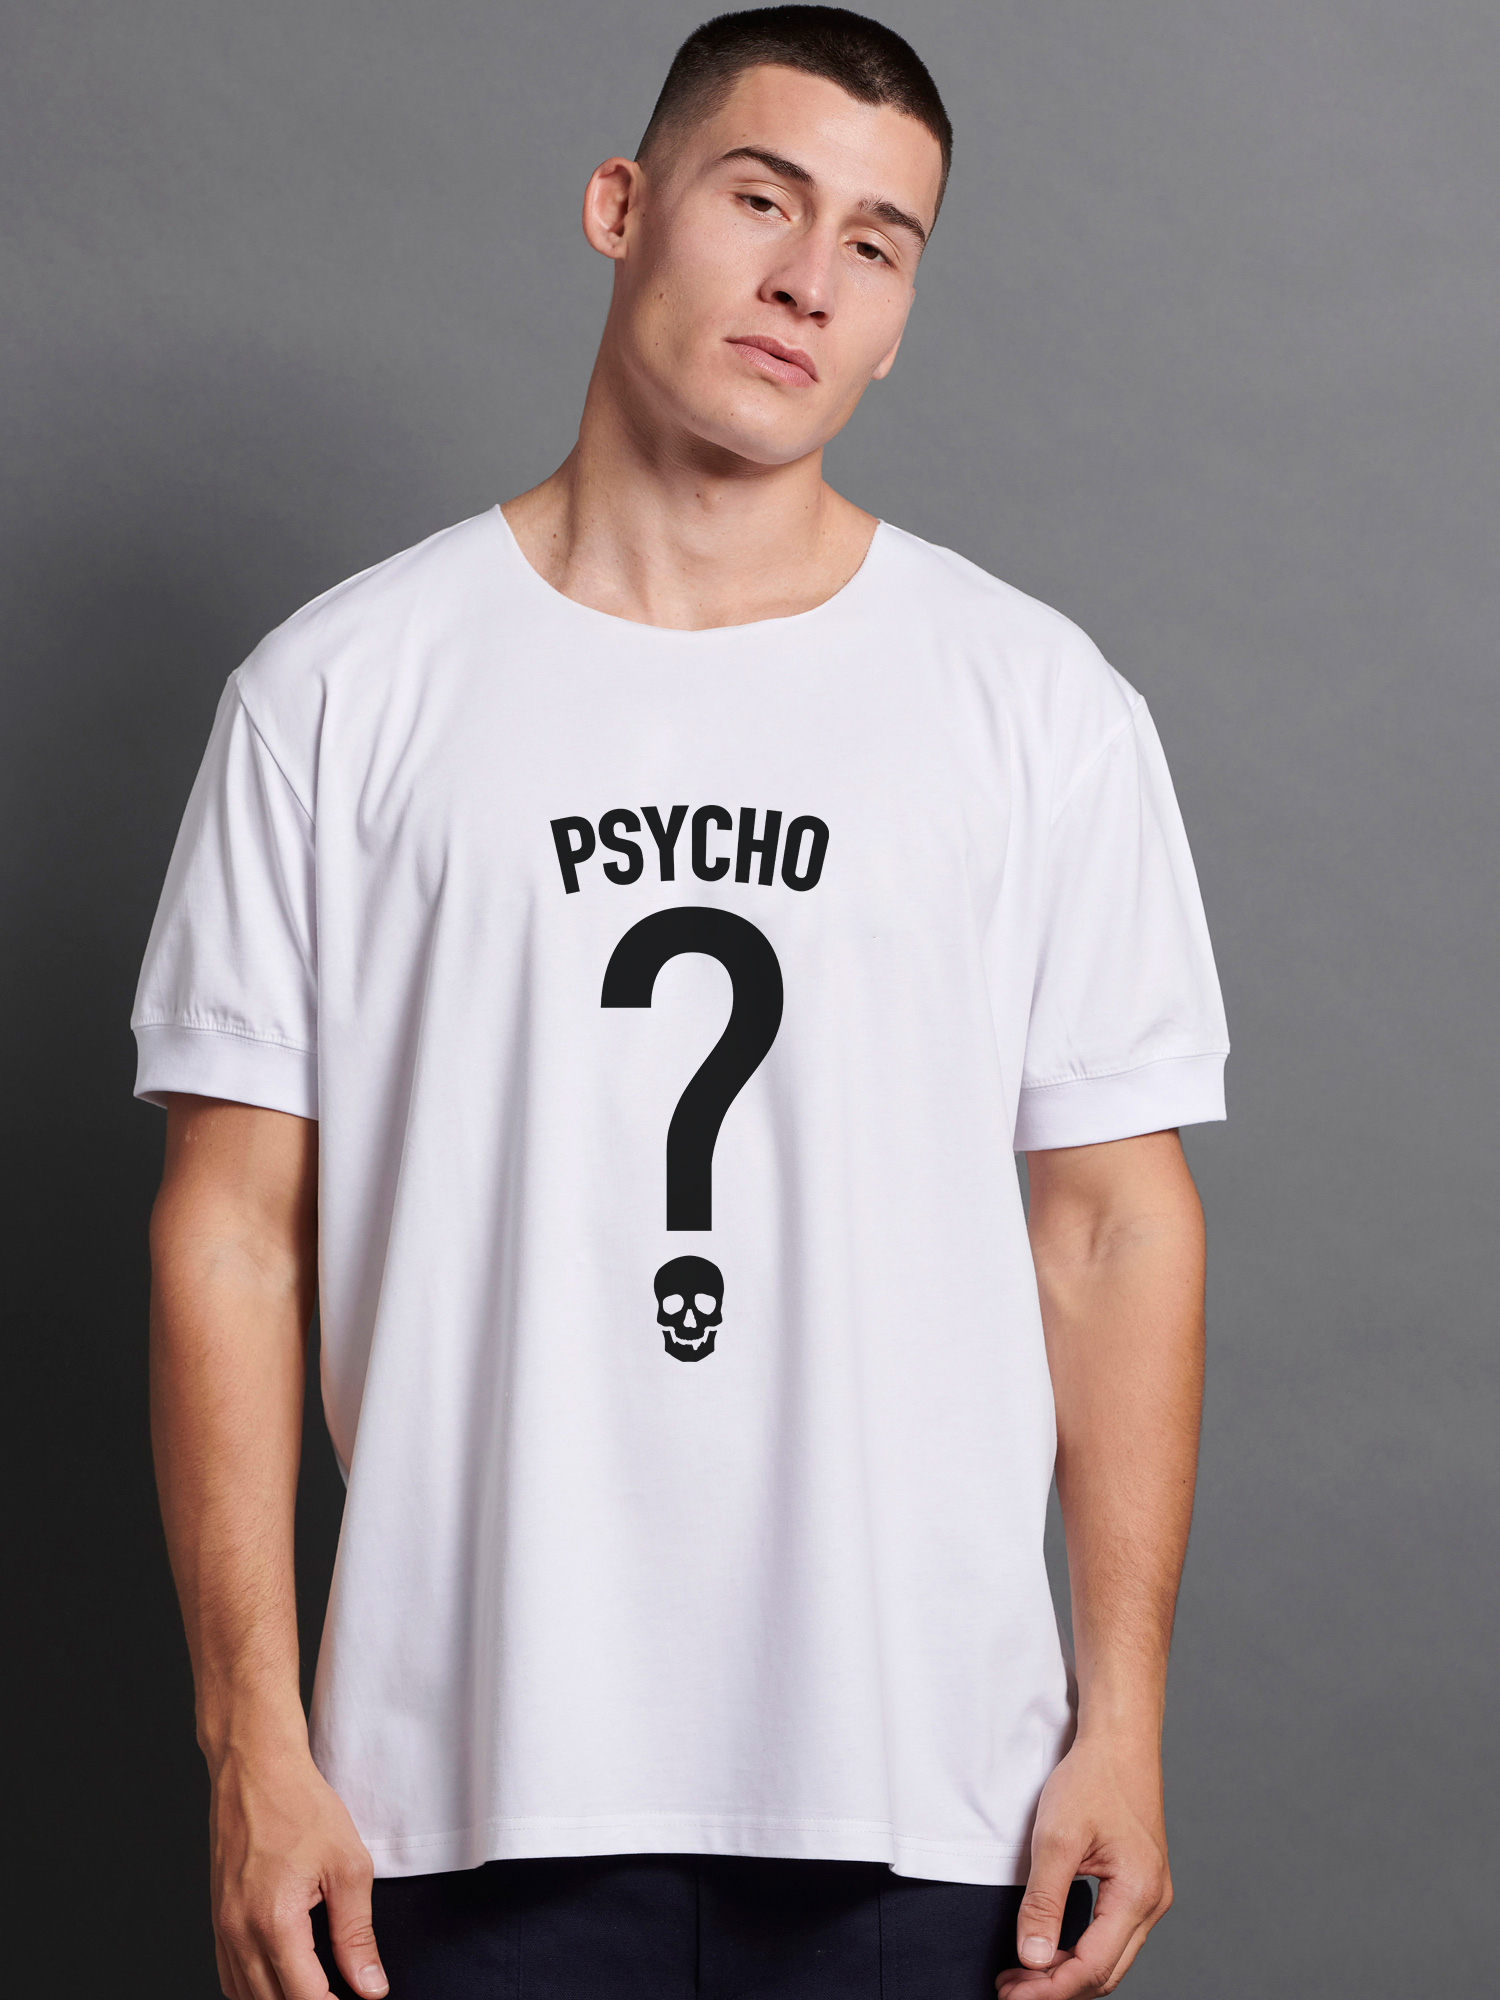 Psycho t-shirt